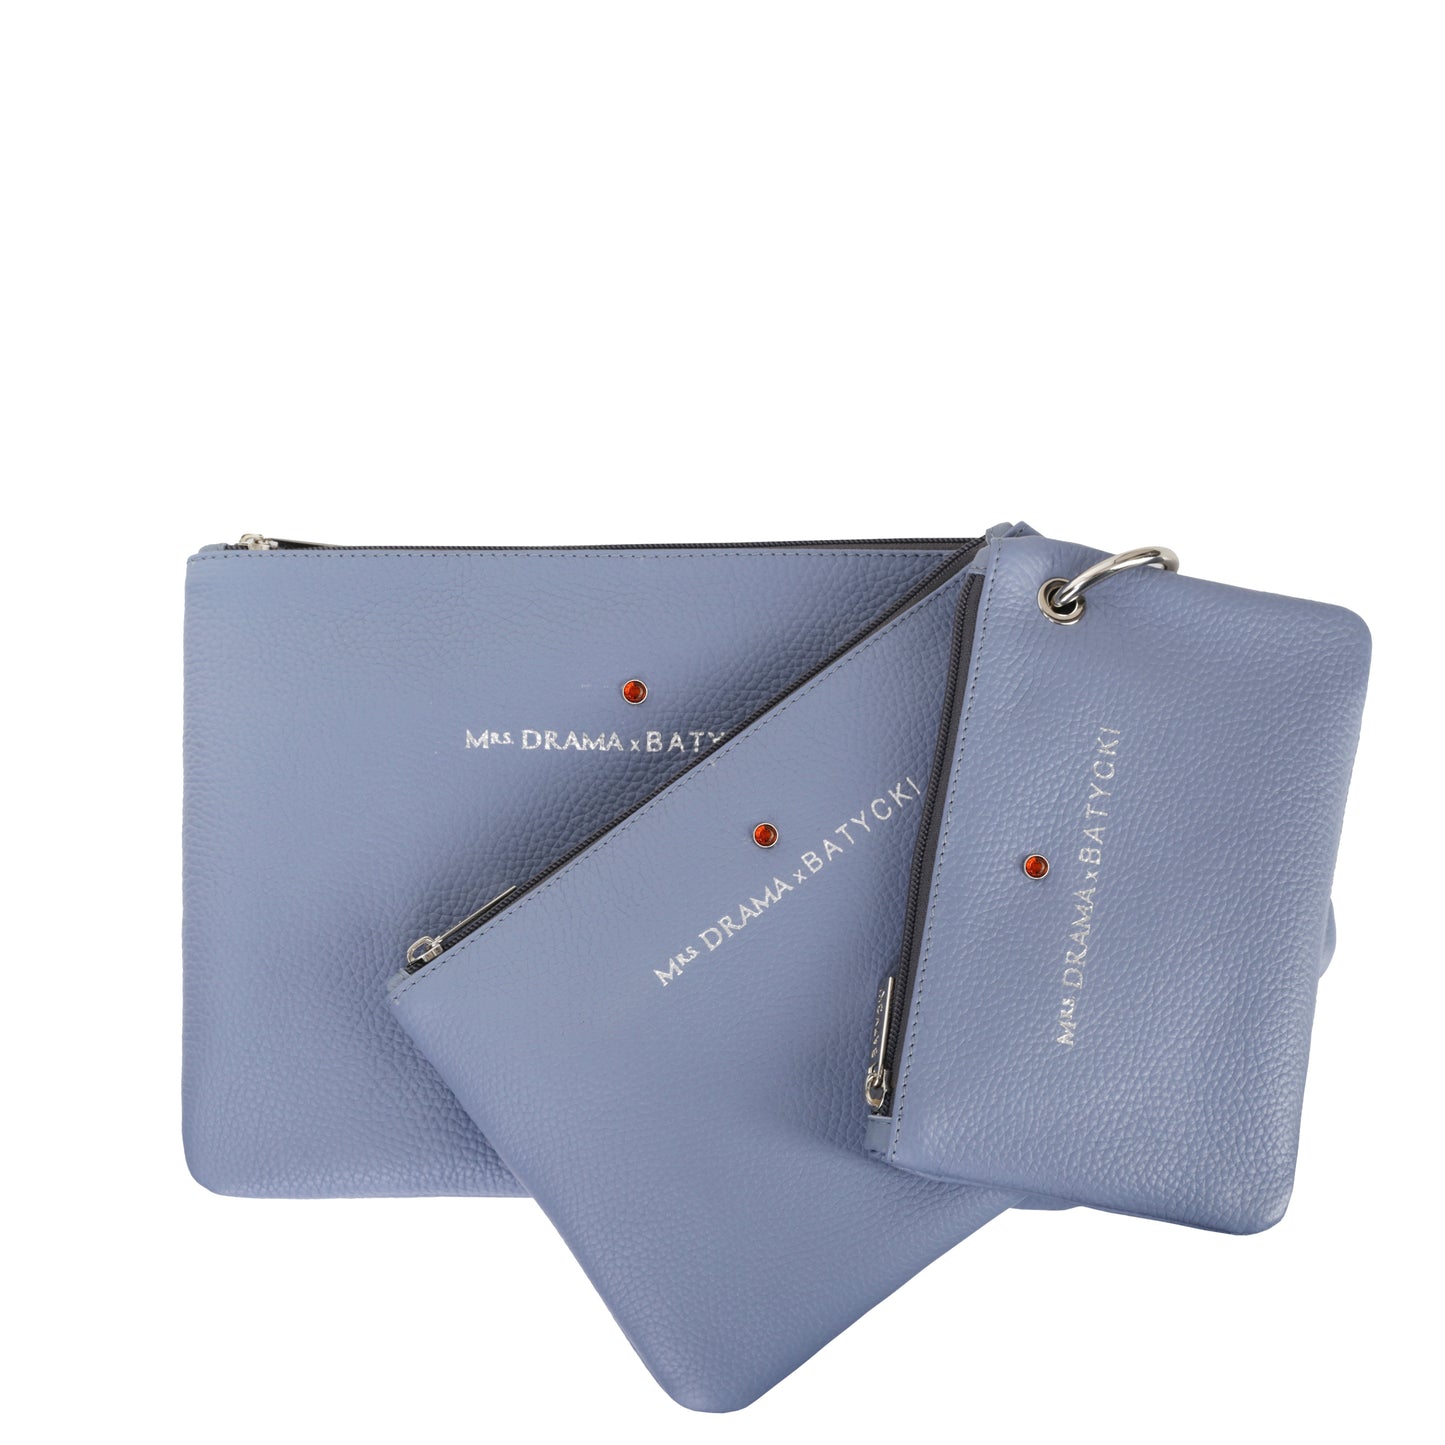 Set of three MRS DRAMA x BATYCKI mousse azure leather cosmetic bags